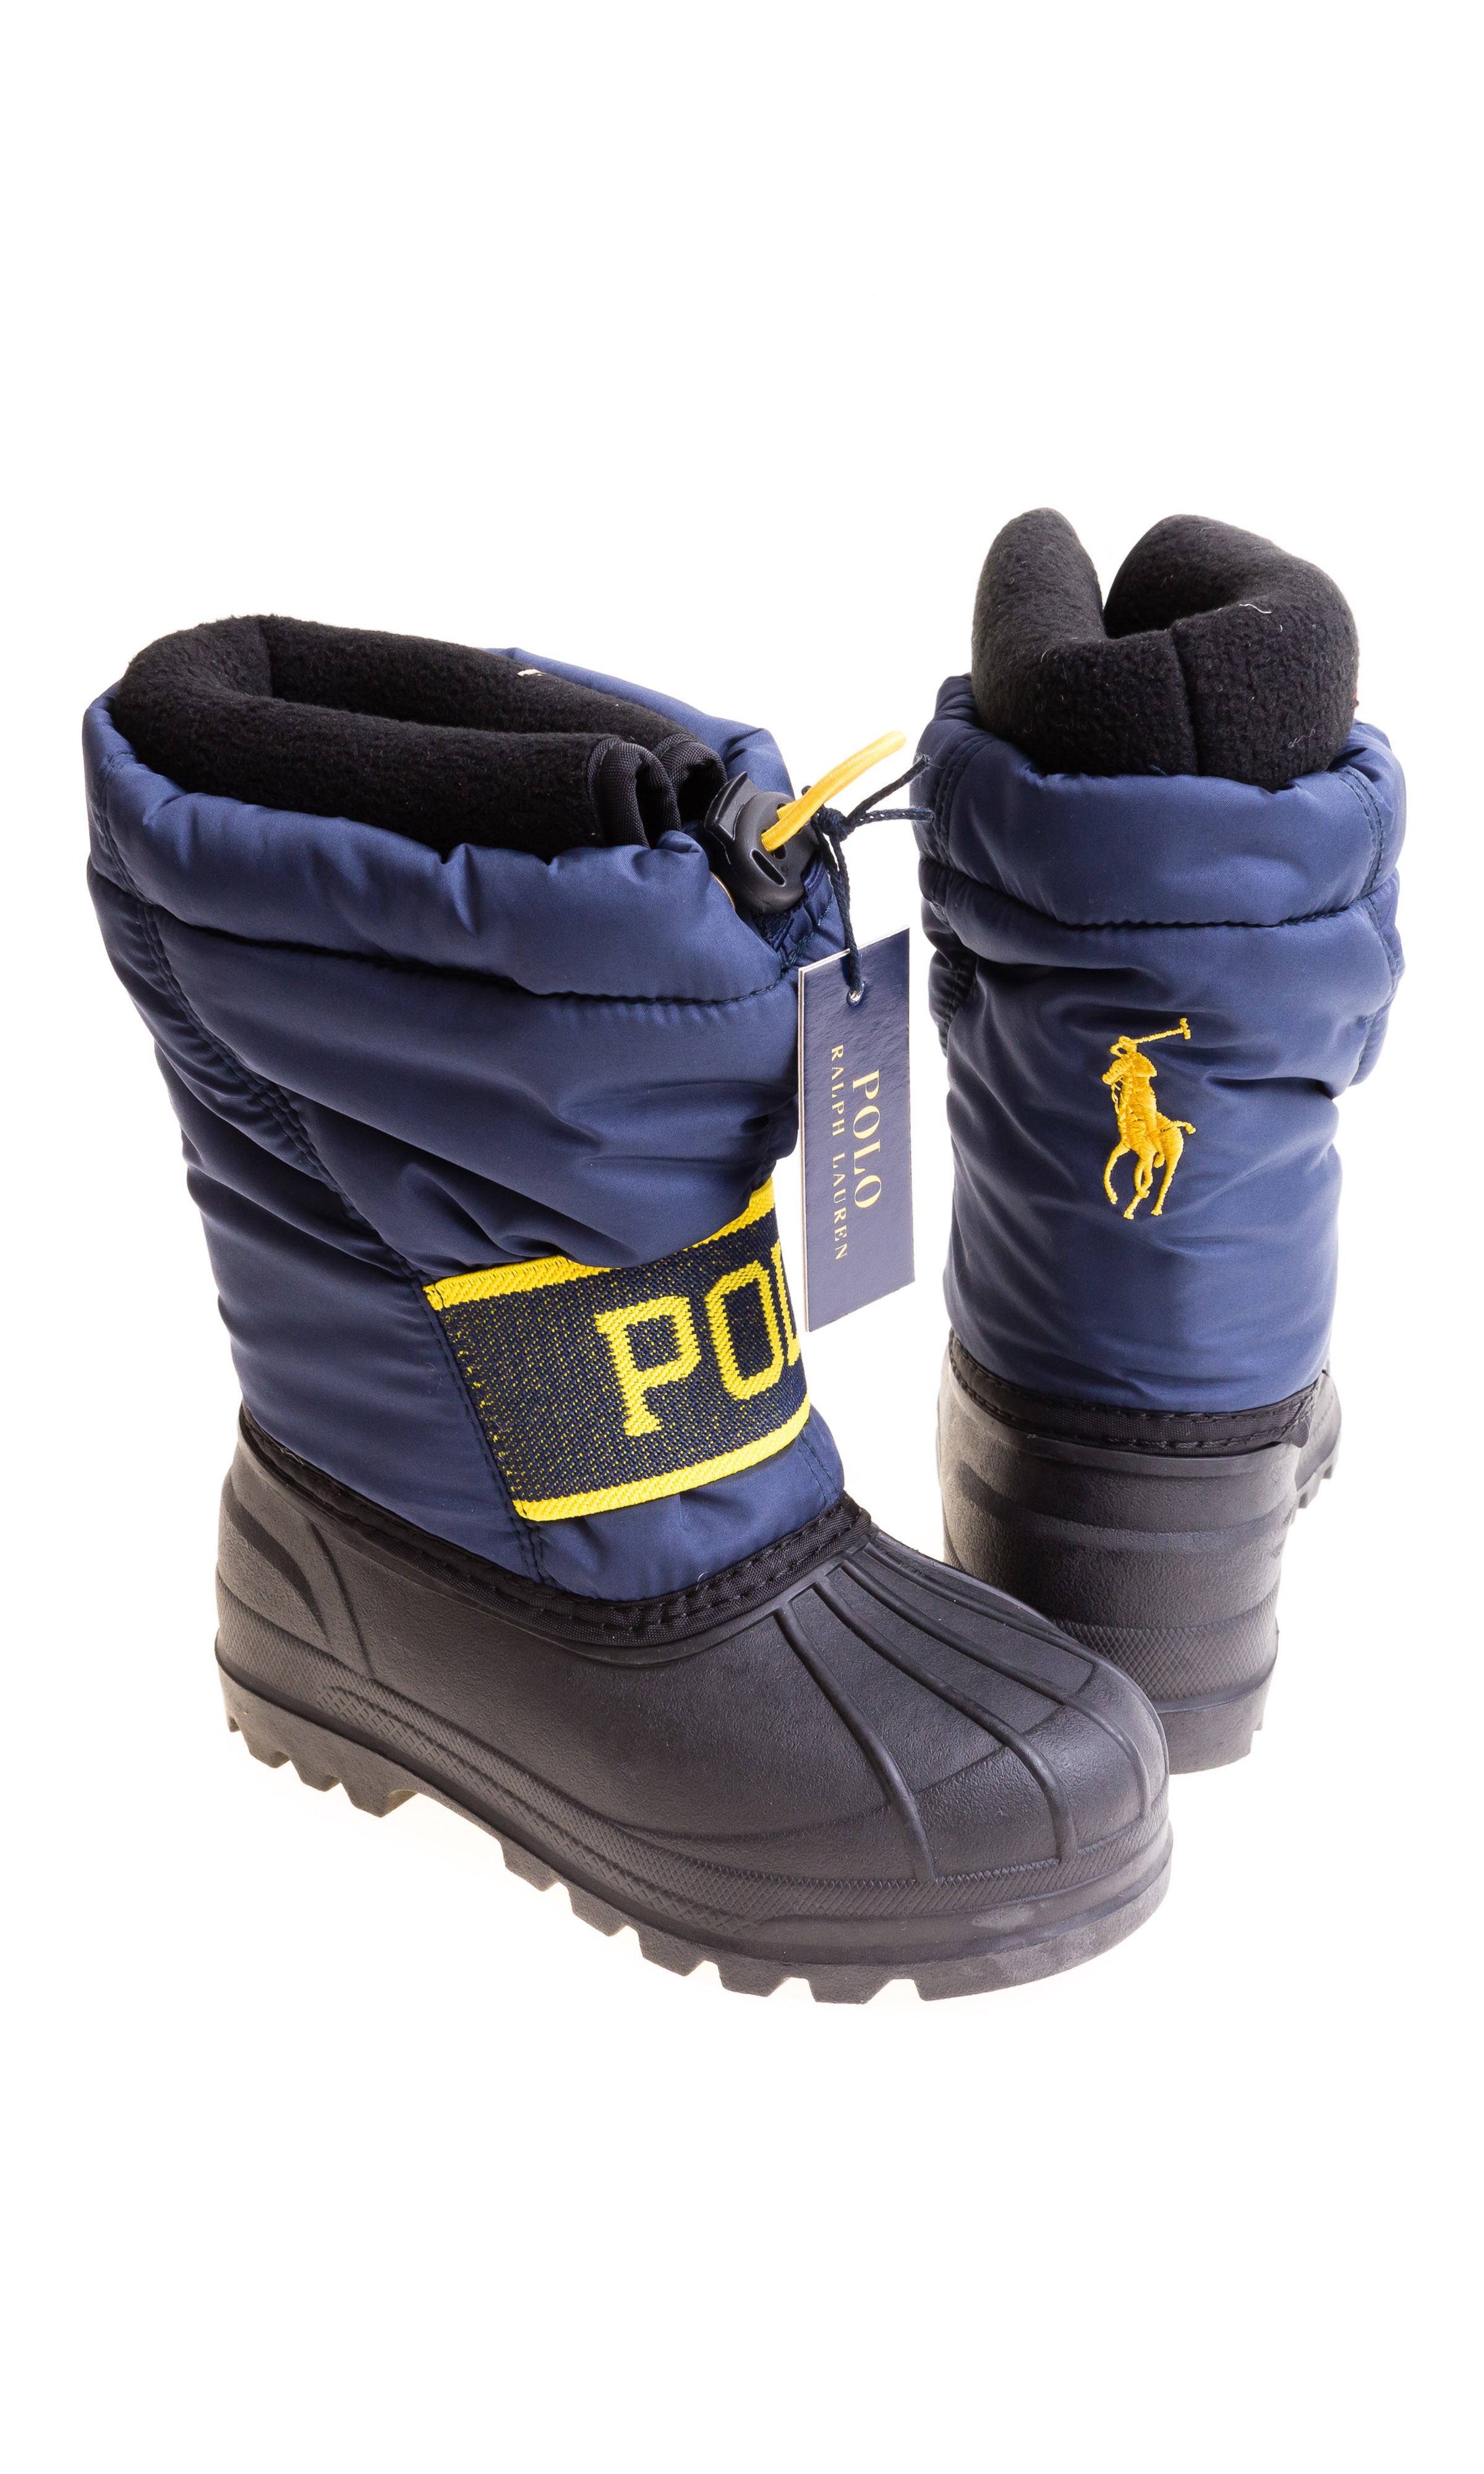 ralph lauren polo snow boots